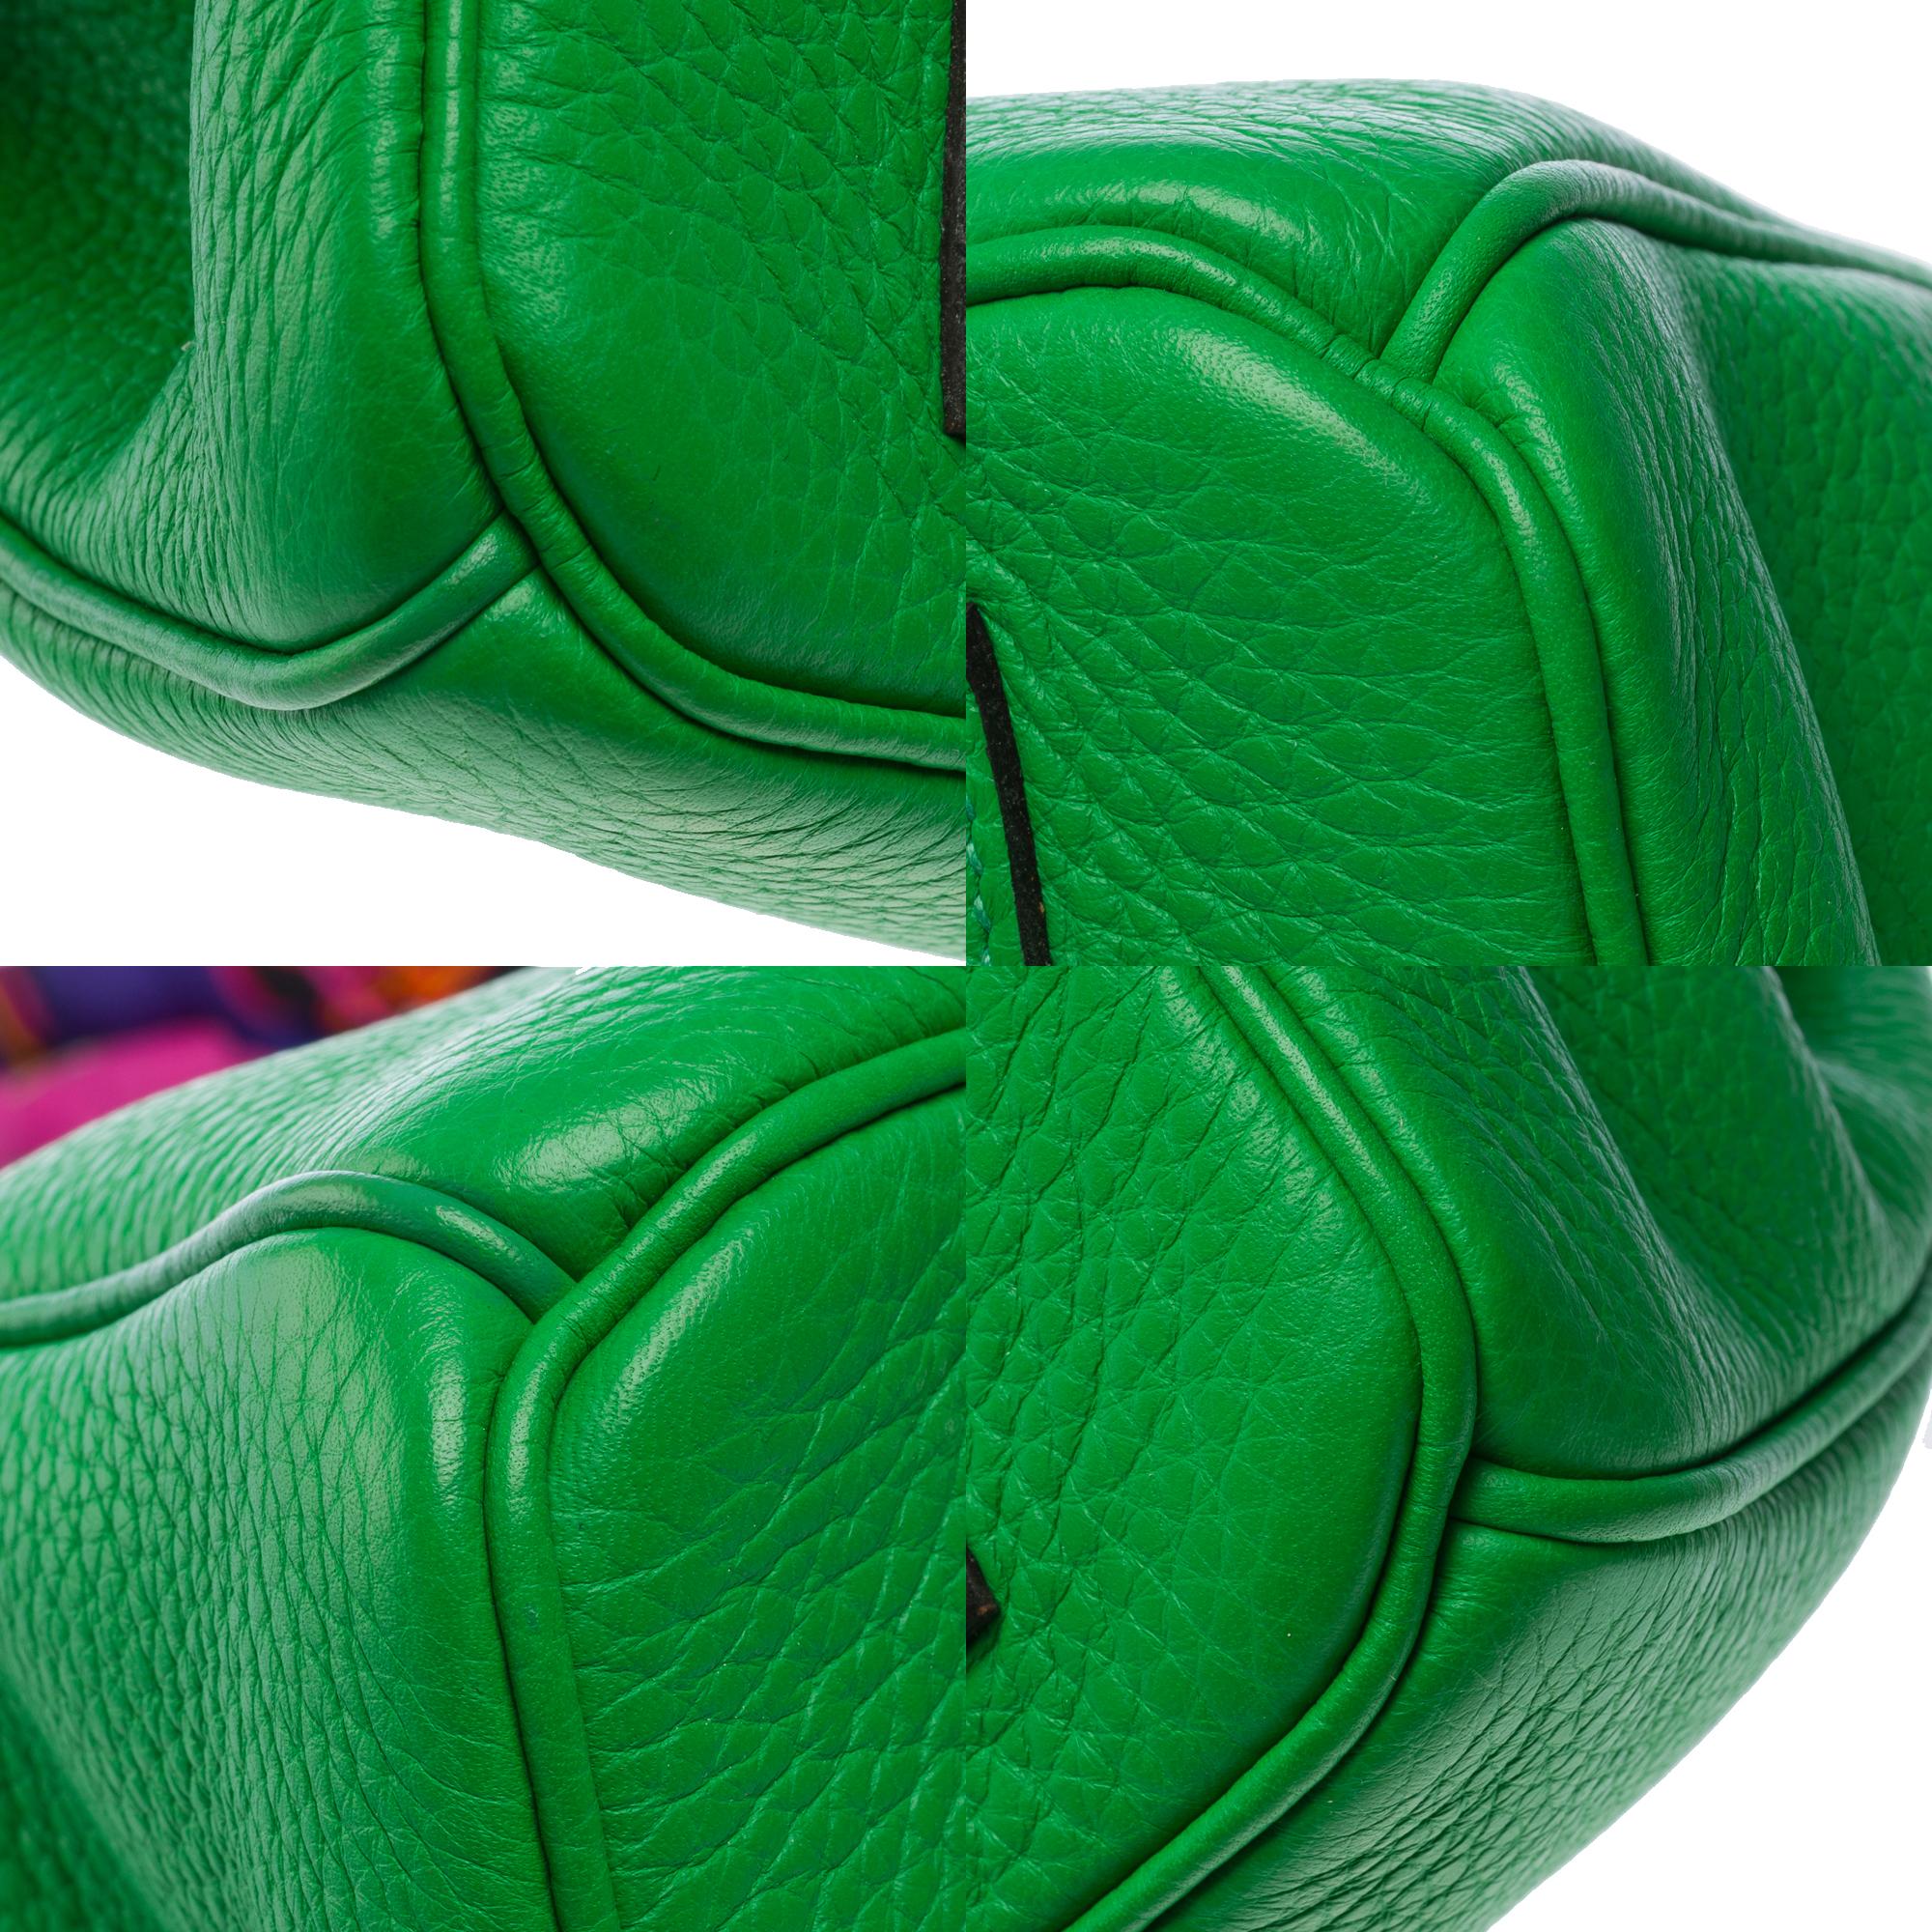 Fantastic Hermès Birkin 35 handbag in Green Bamboo Togo leather, SHW 6